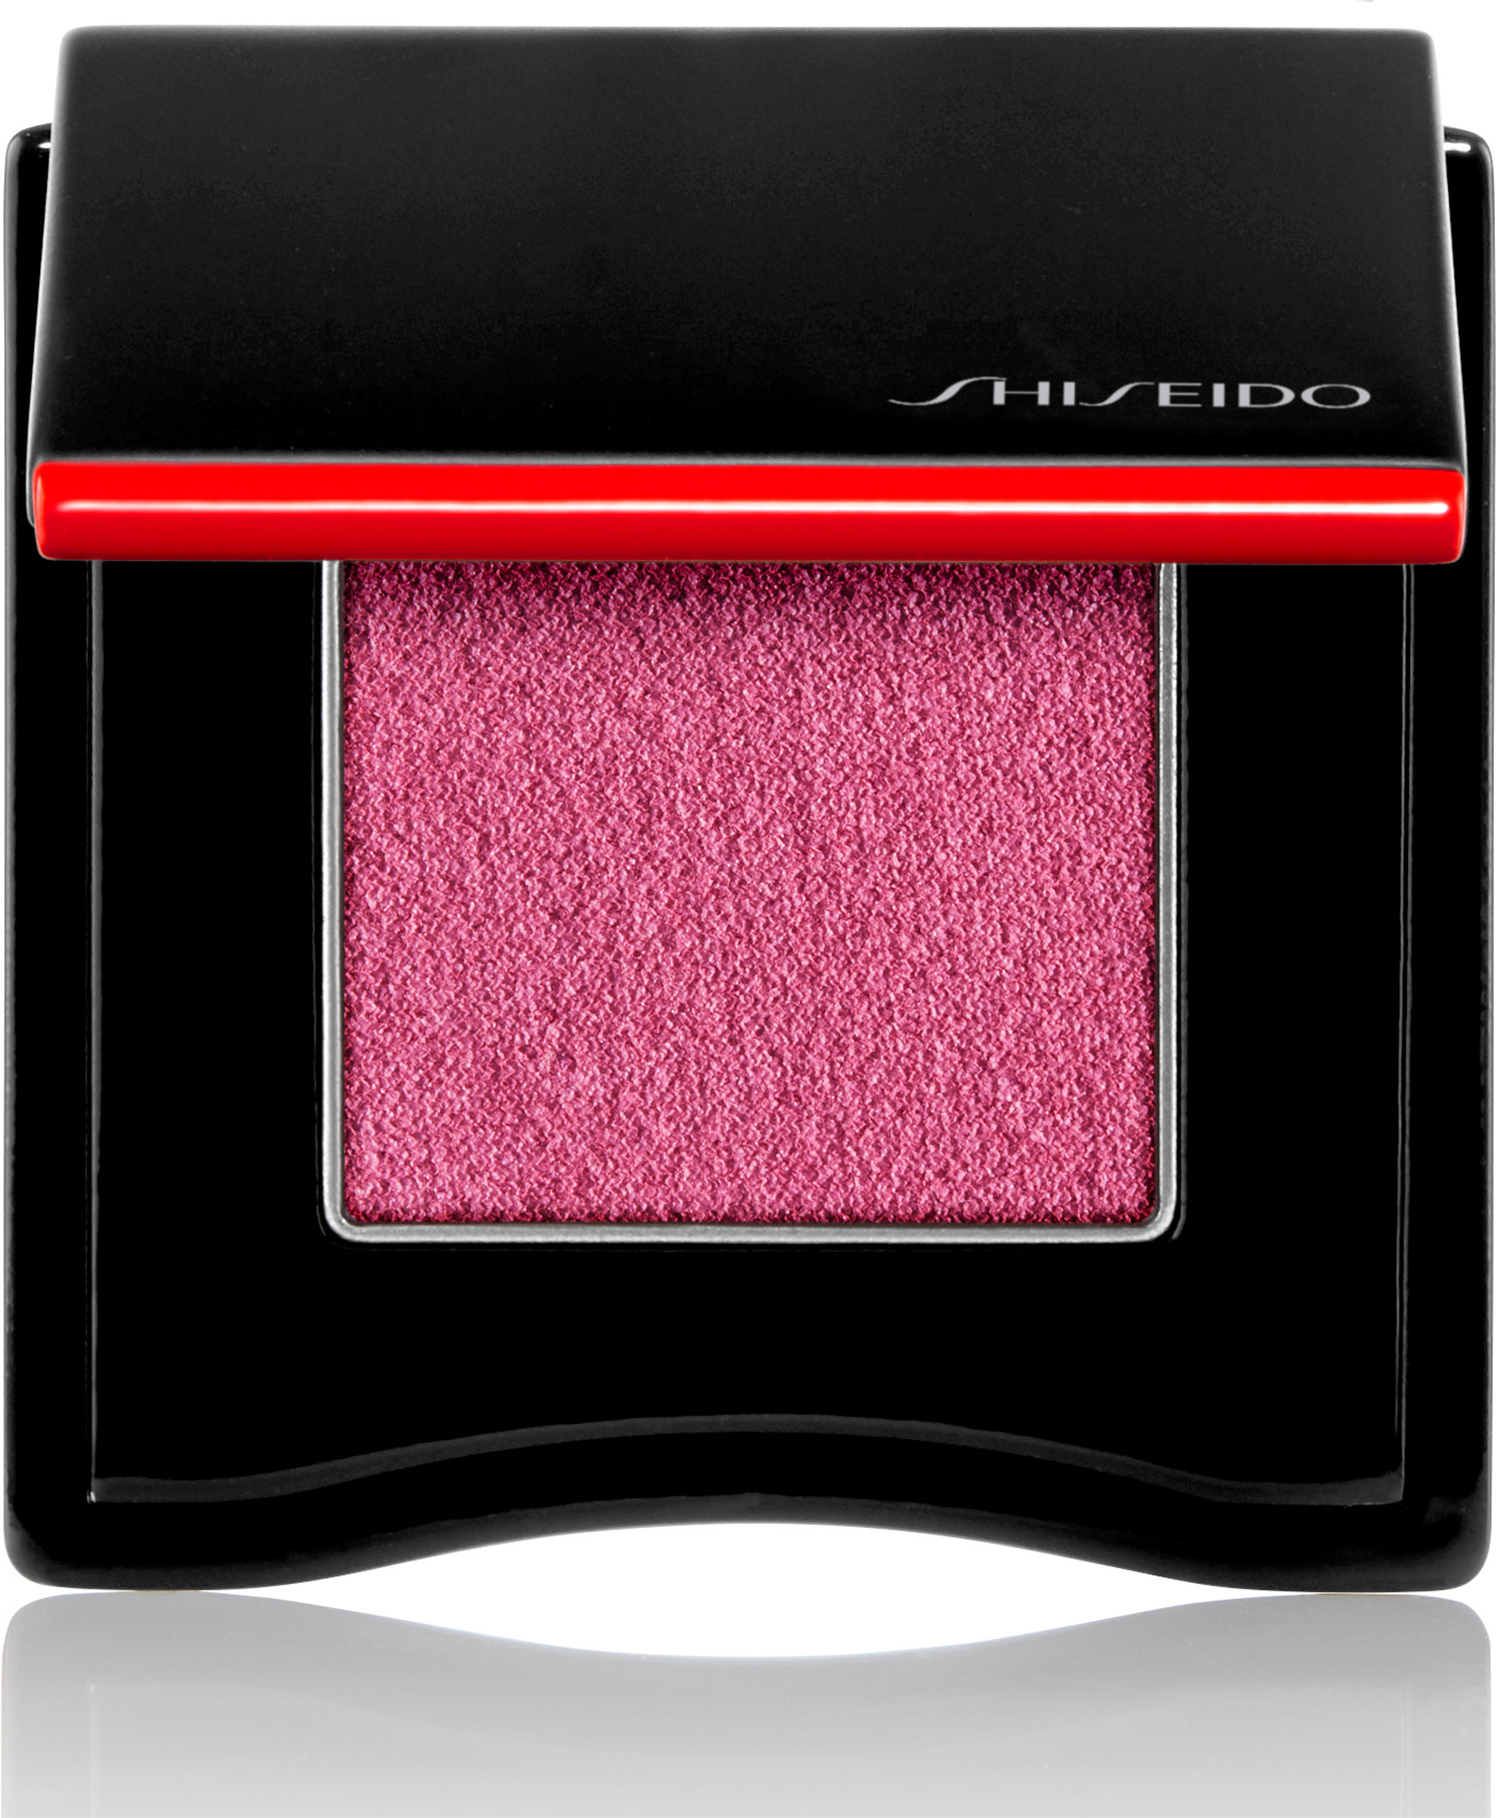 Shiseido POP PowderGel Eye Shadow 11 Waku-Waku Pink